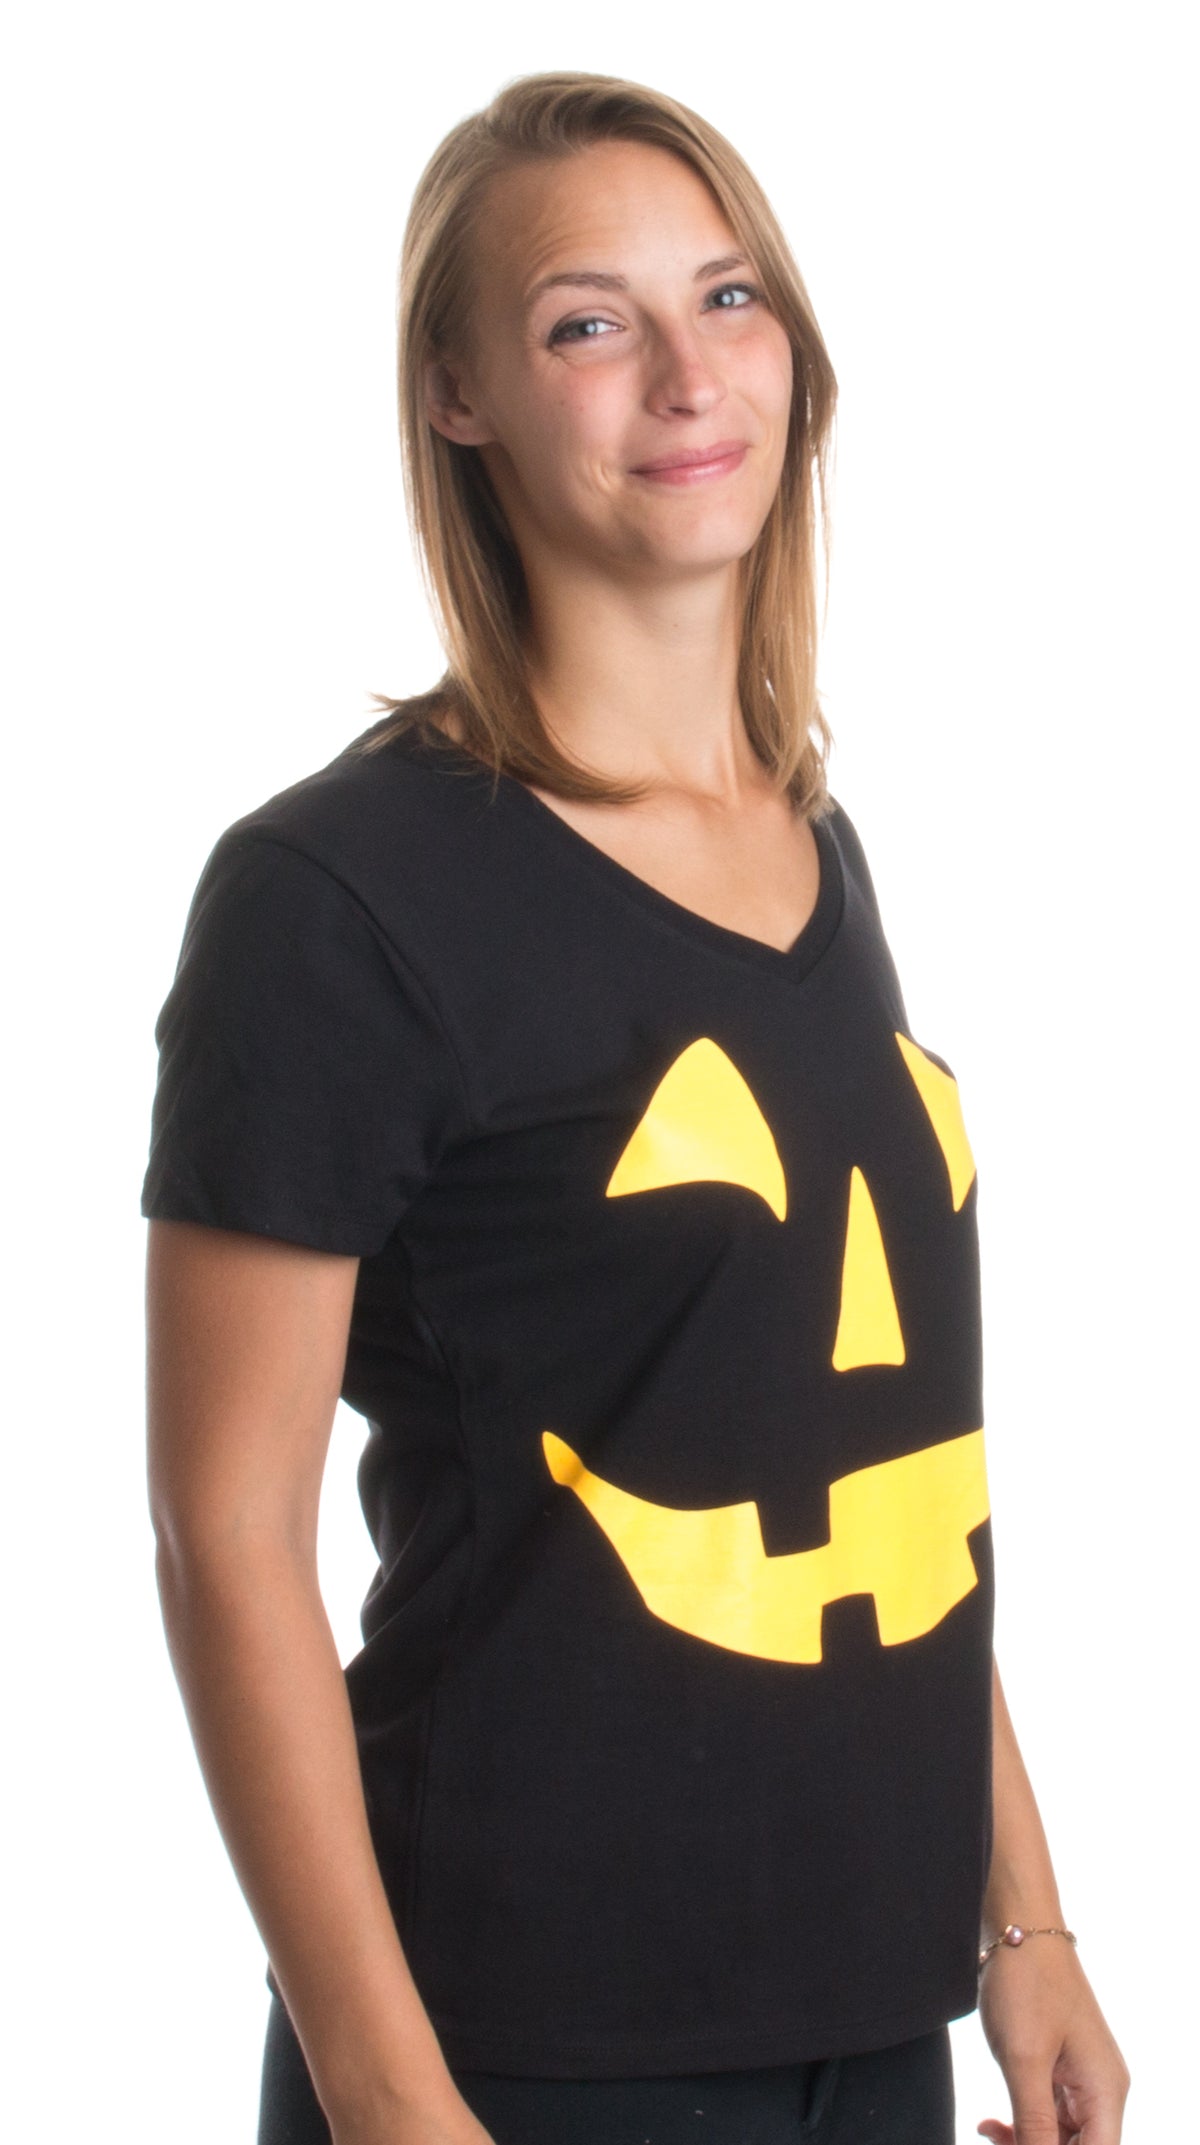 Jack O Lantern Interactive Glow T-Shirt - Halloween Edition